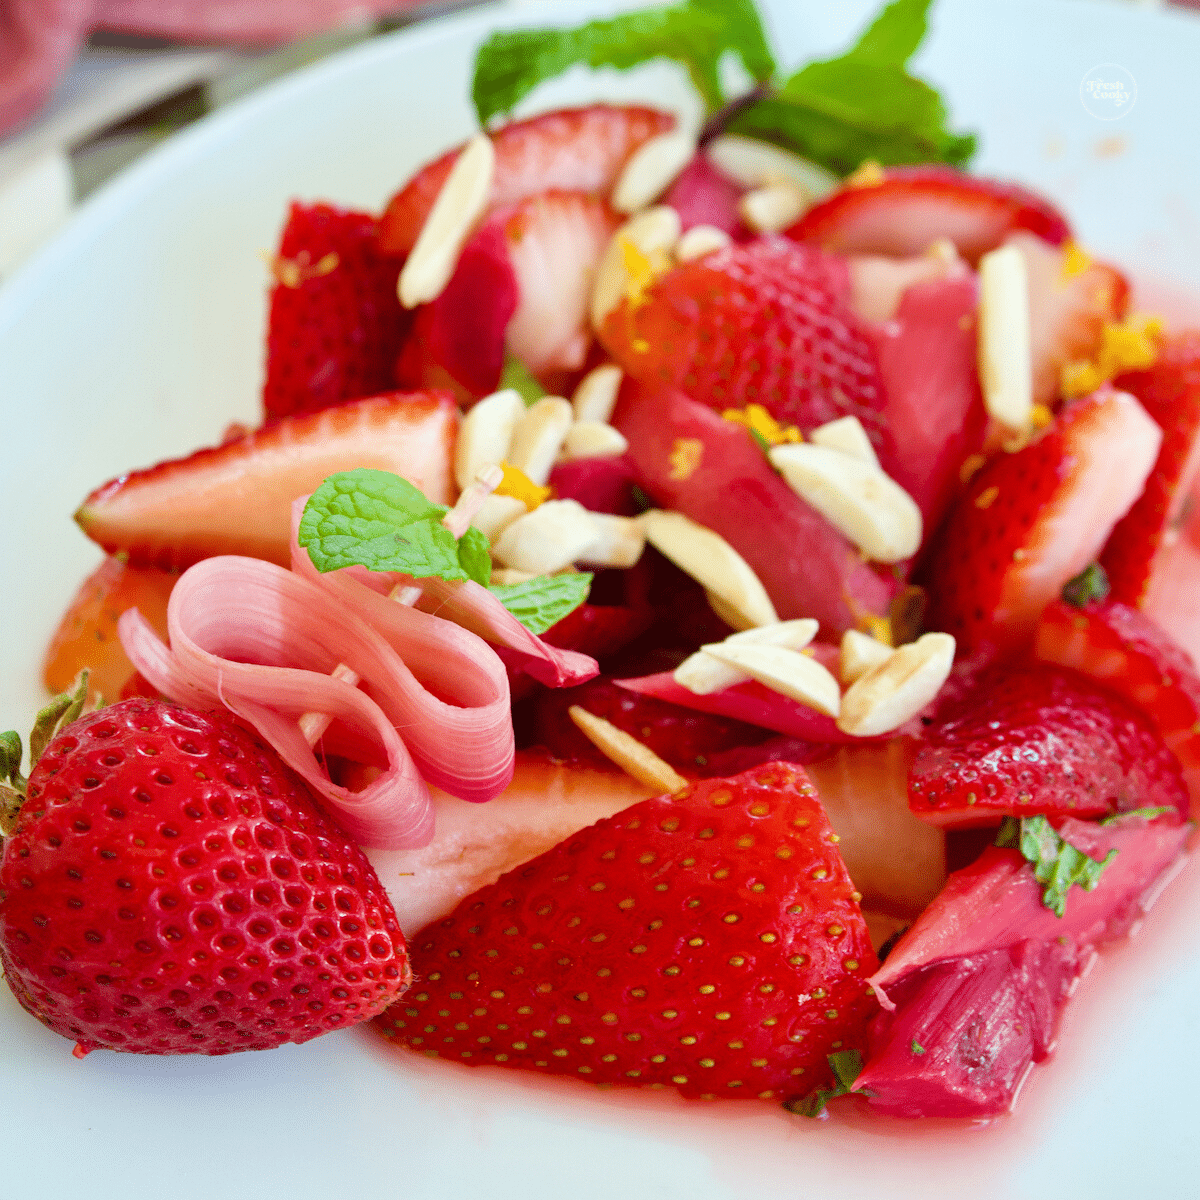 Strawberry rhubarb salad with pretty ribbon of rhubarb.